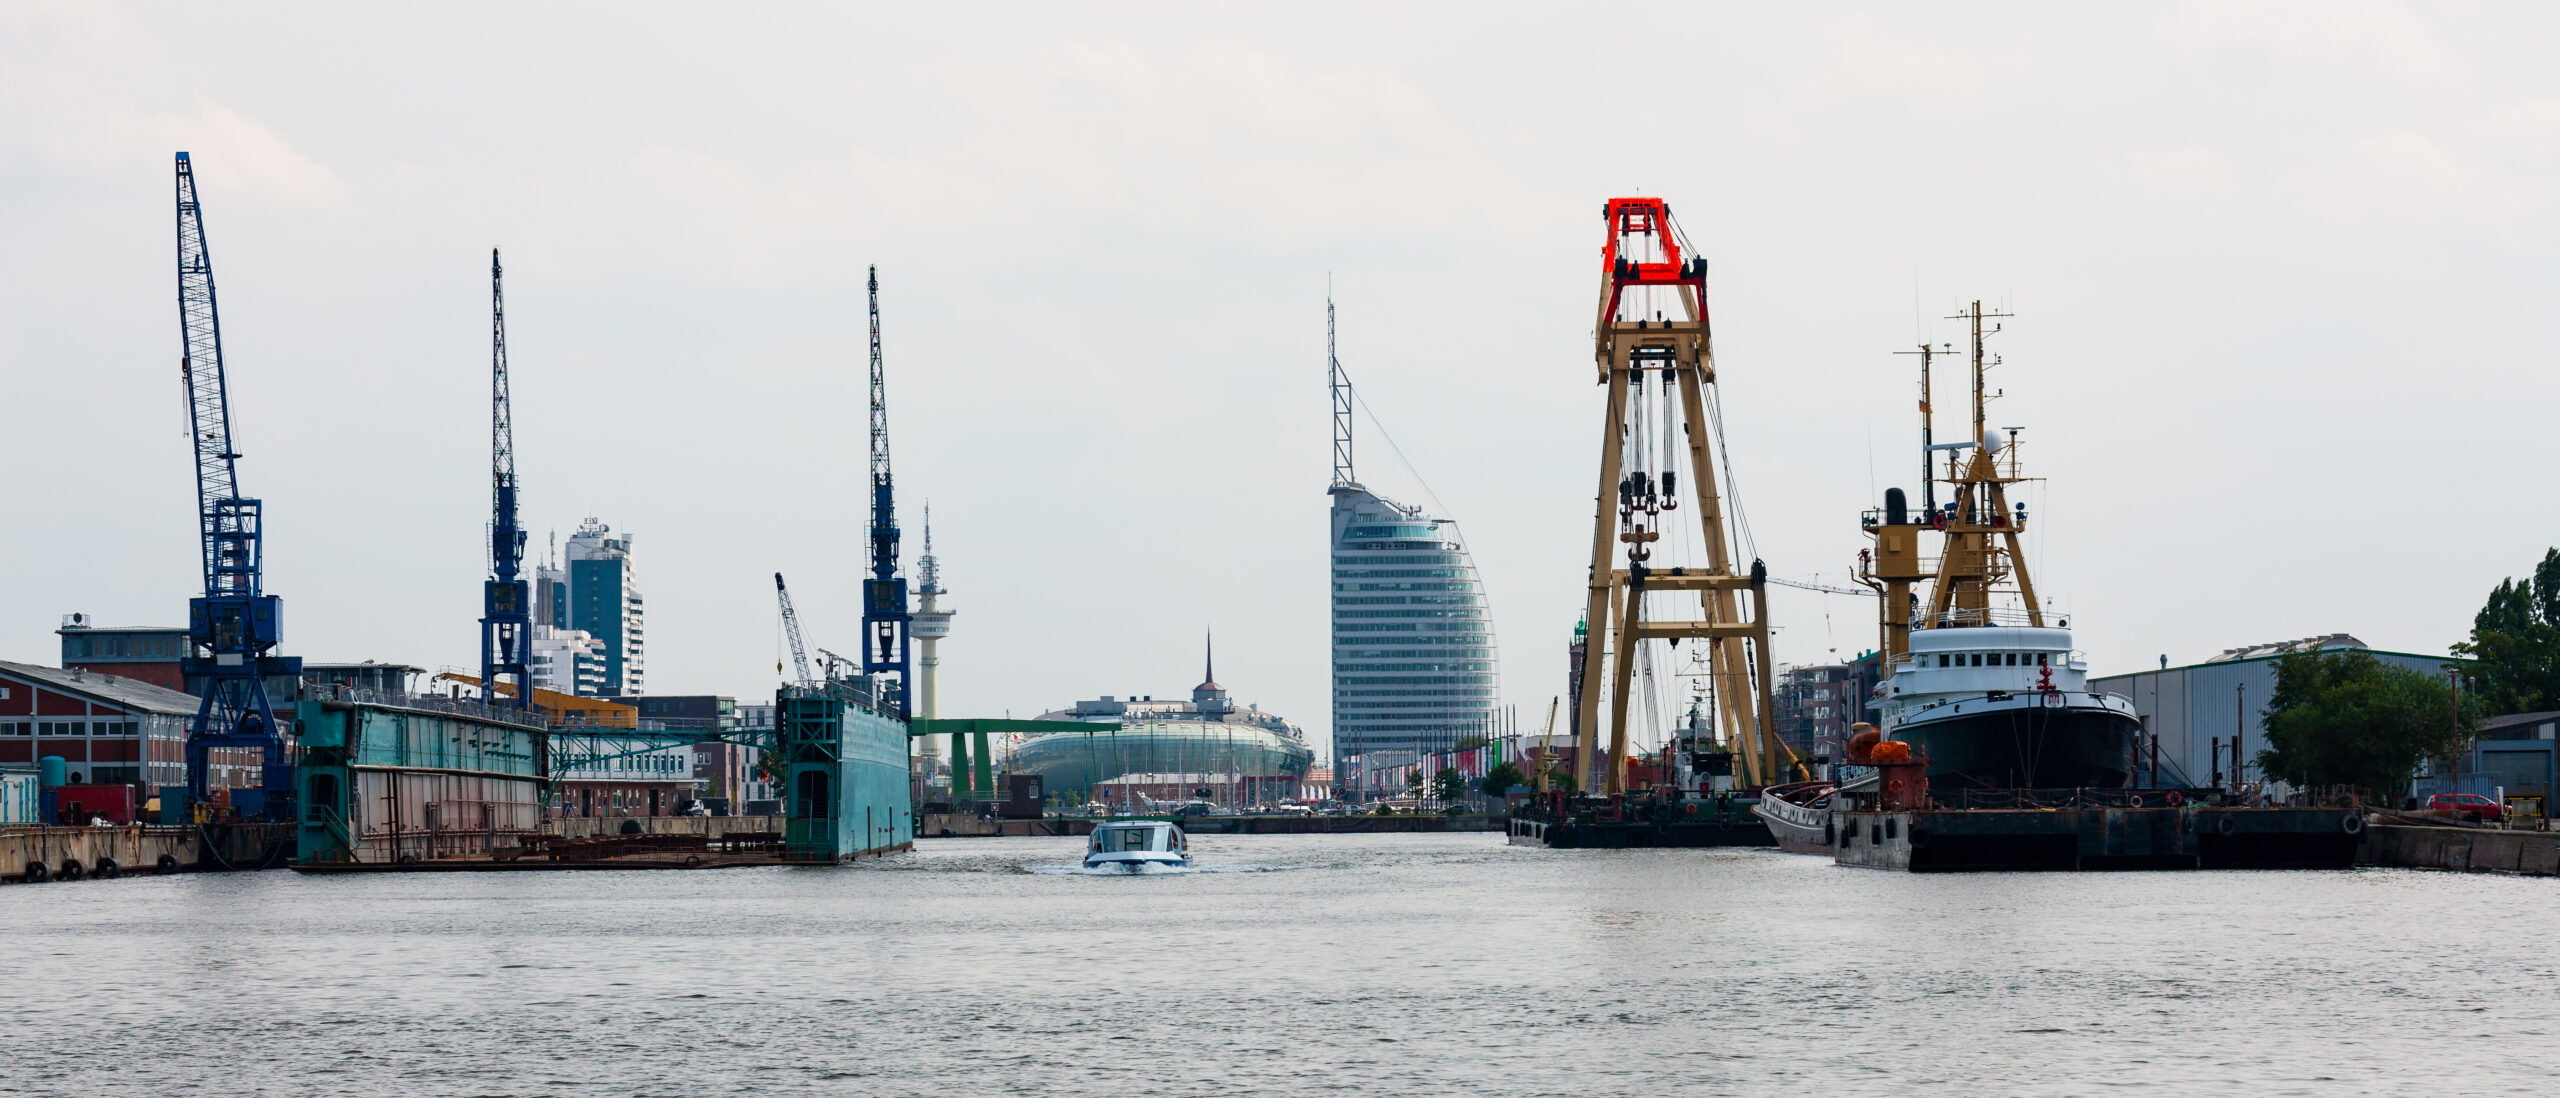 Car carrier knocked over a shipyard crane in Bremerhaven